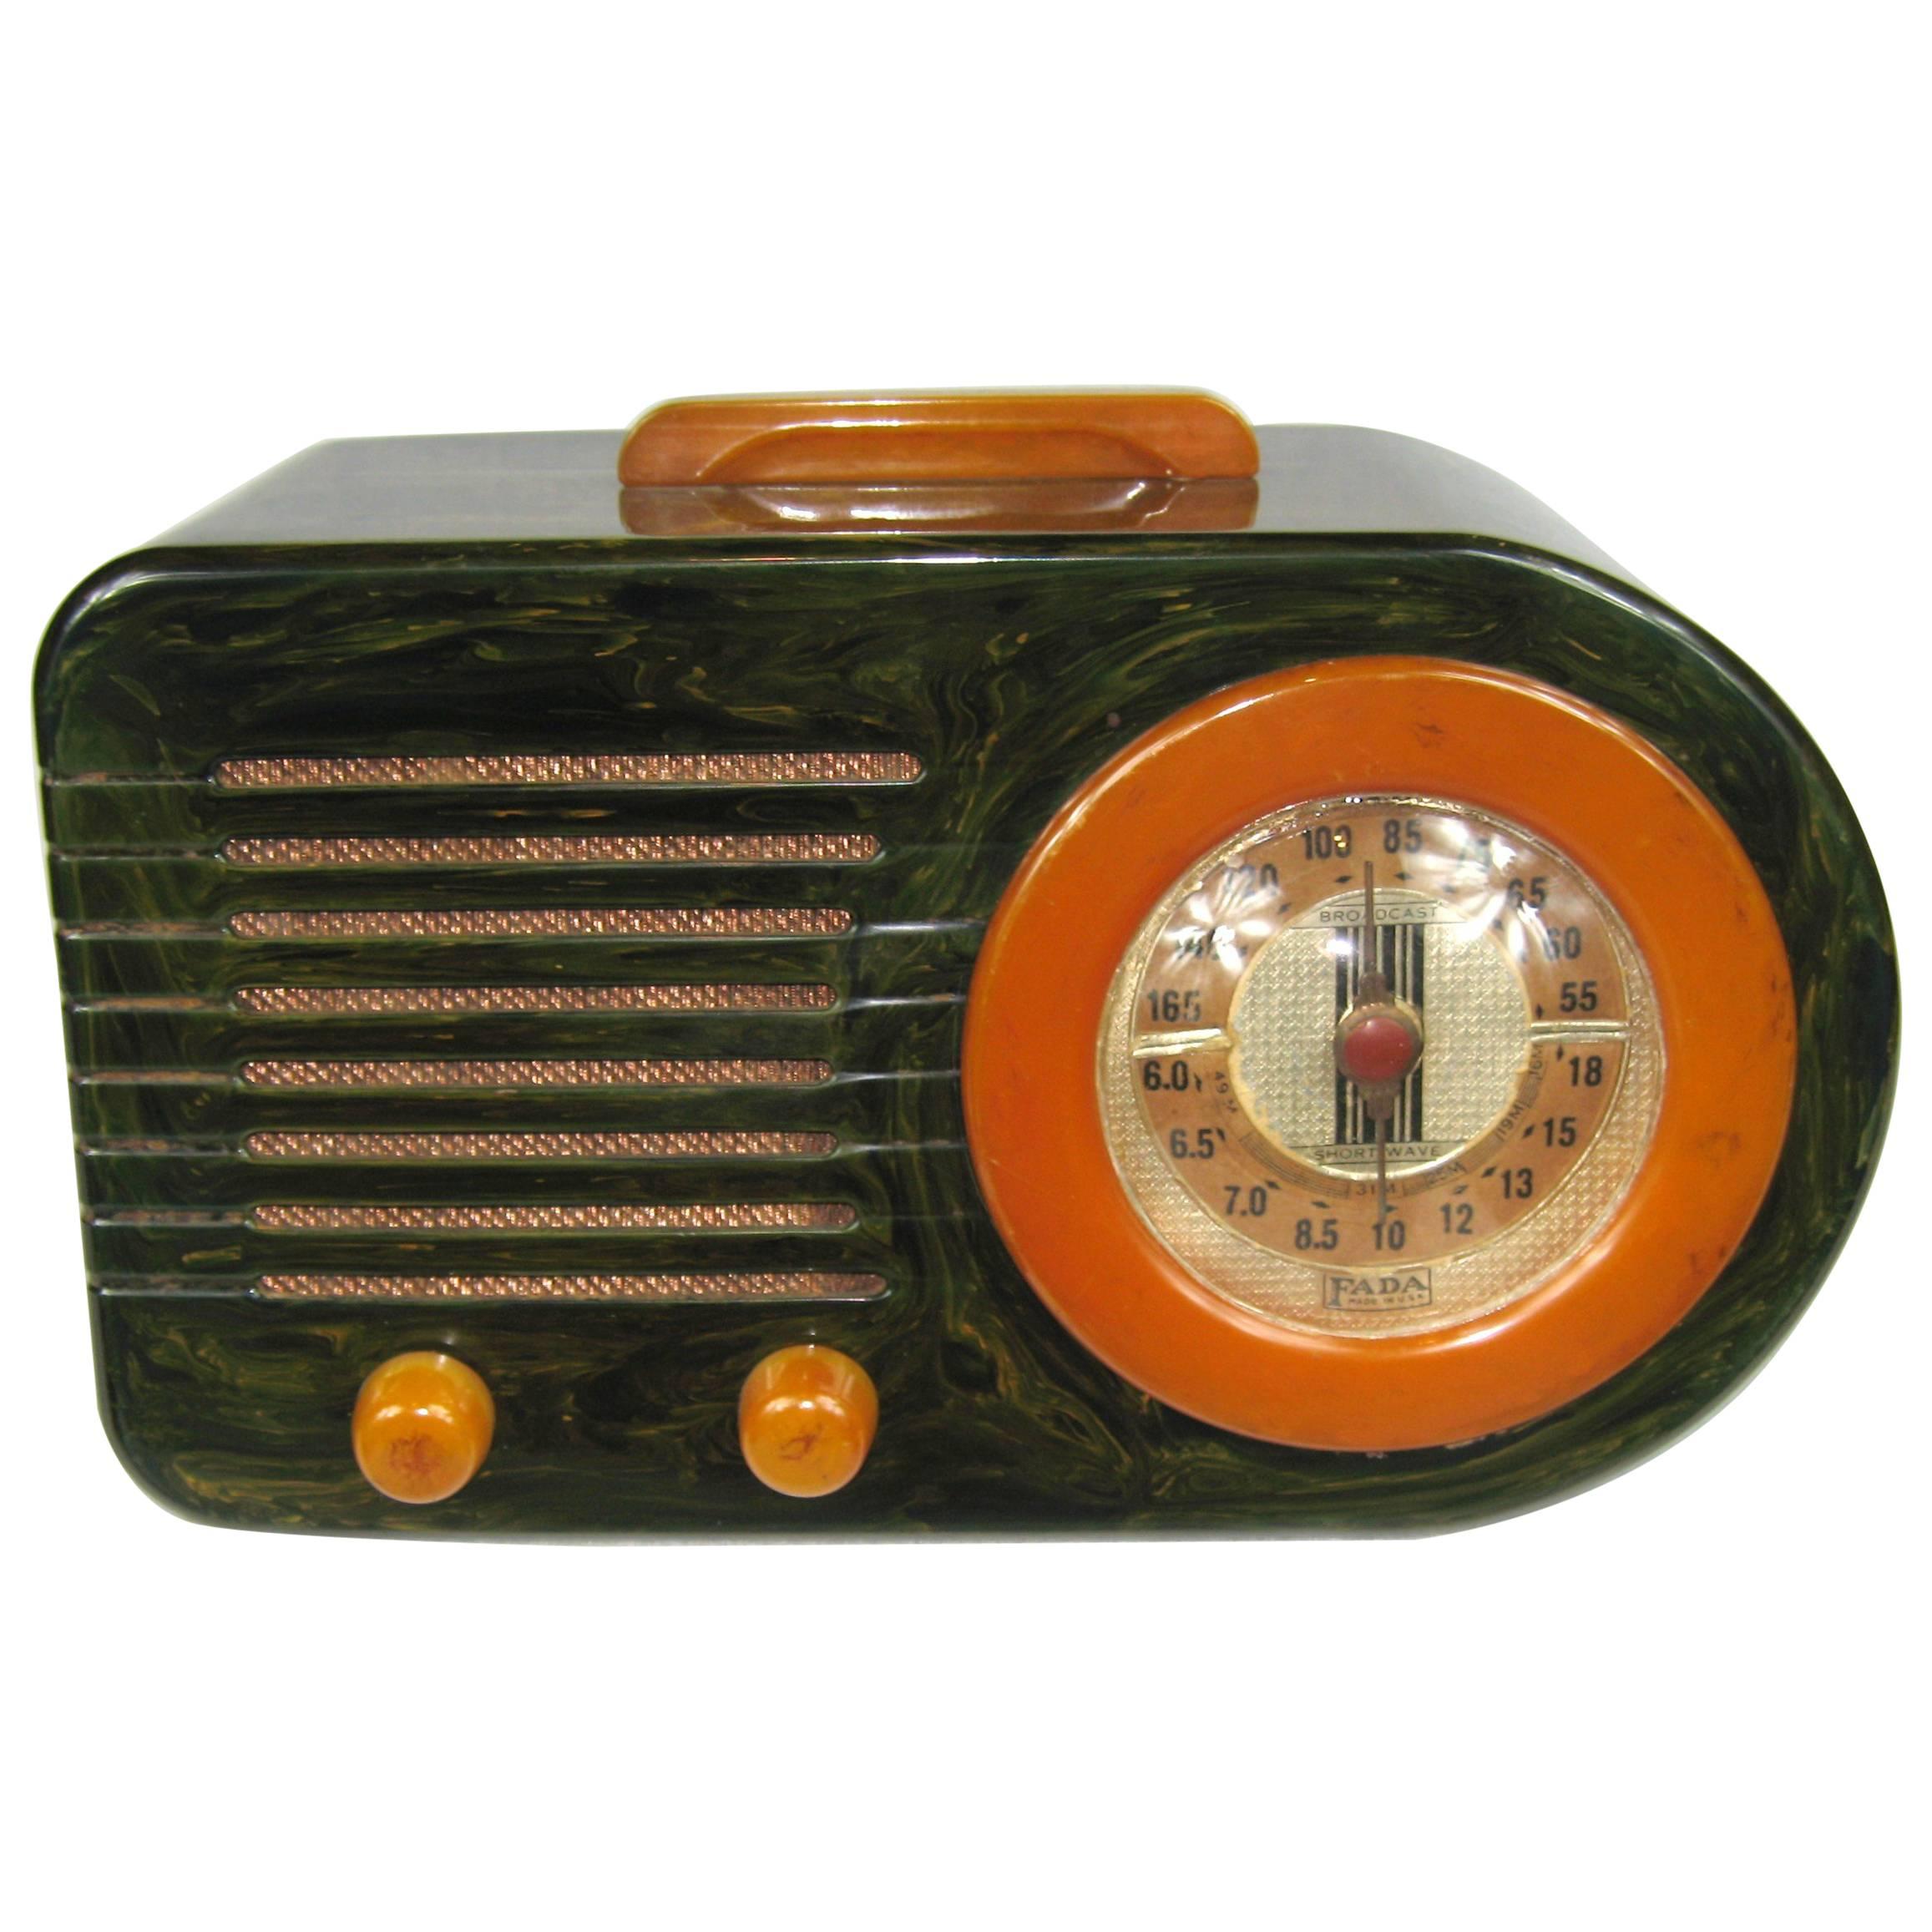 1940 Fada Bullet 116 Bakelite Catalin Radio, Blue with Pumpkin Trim